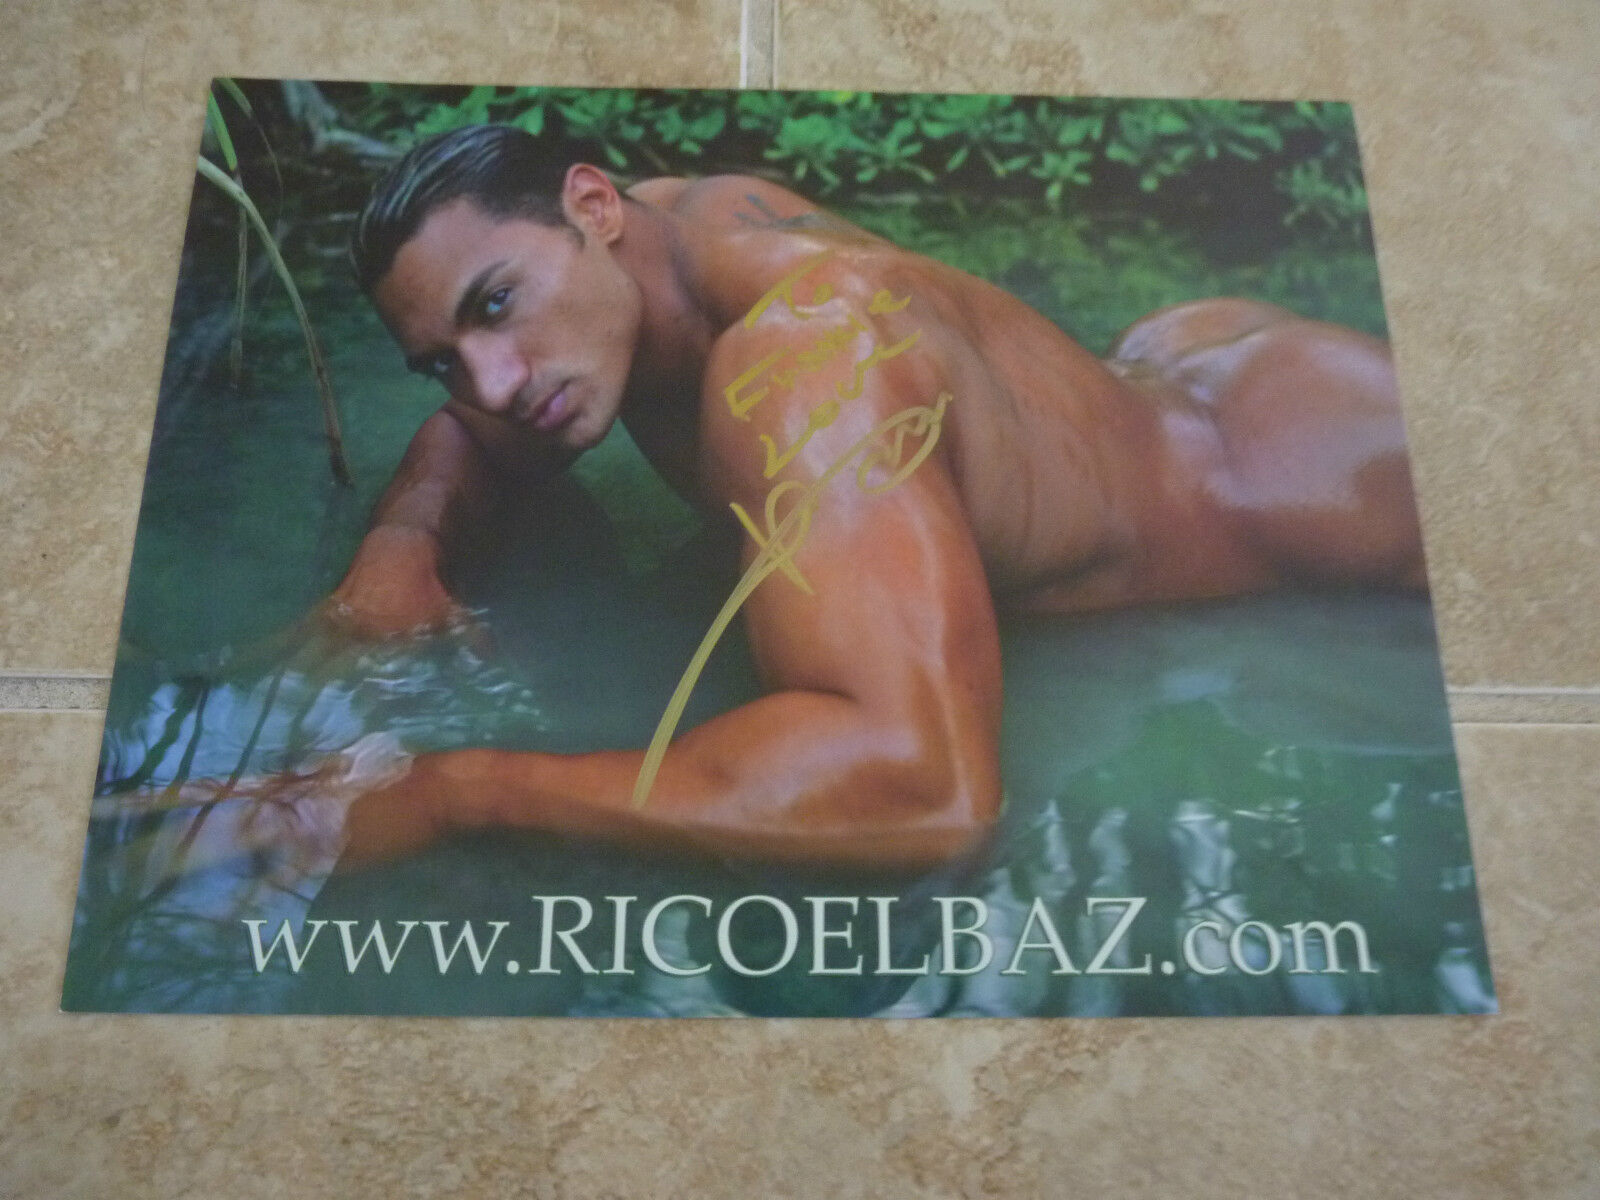 RICO ALBAZ Signed 8x10 Color Photo Poster painting 2008 AVN Awards Las Vegas